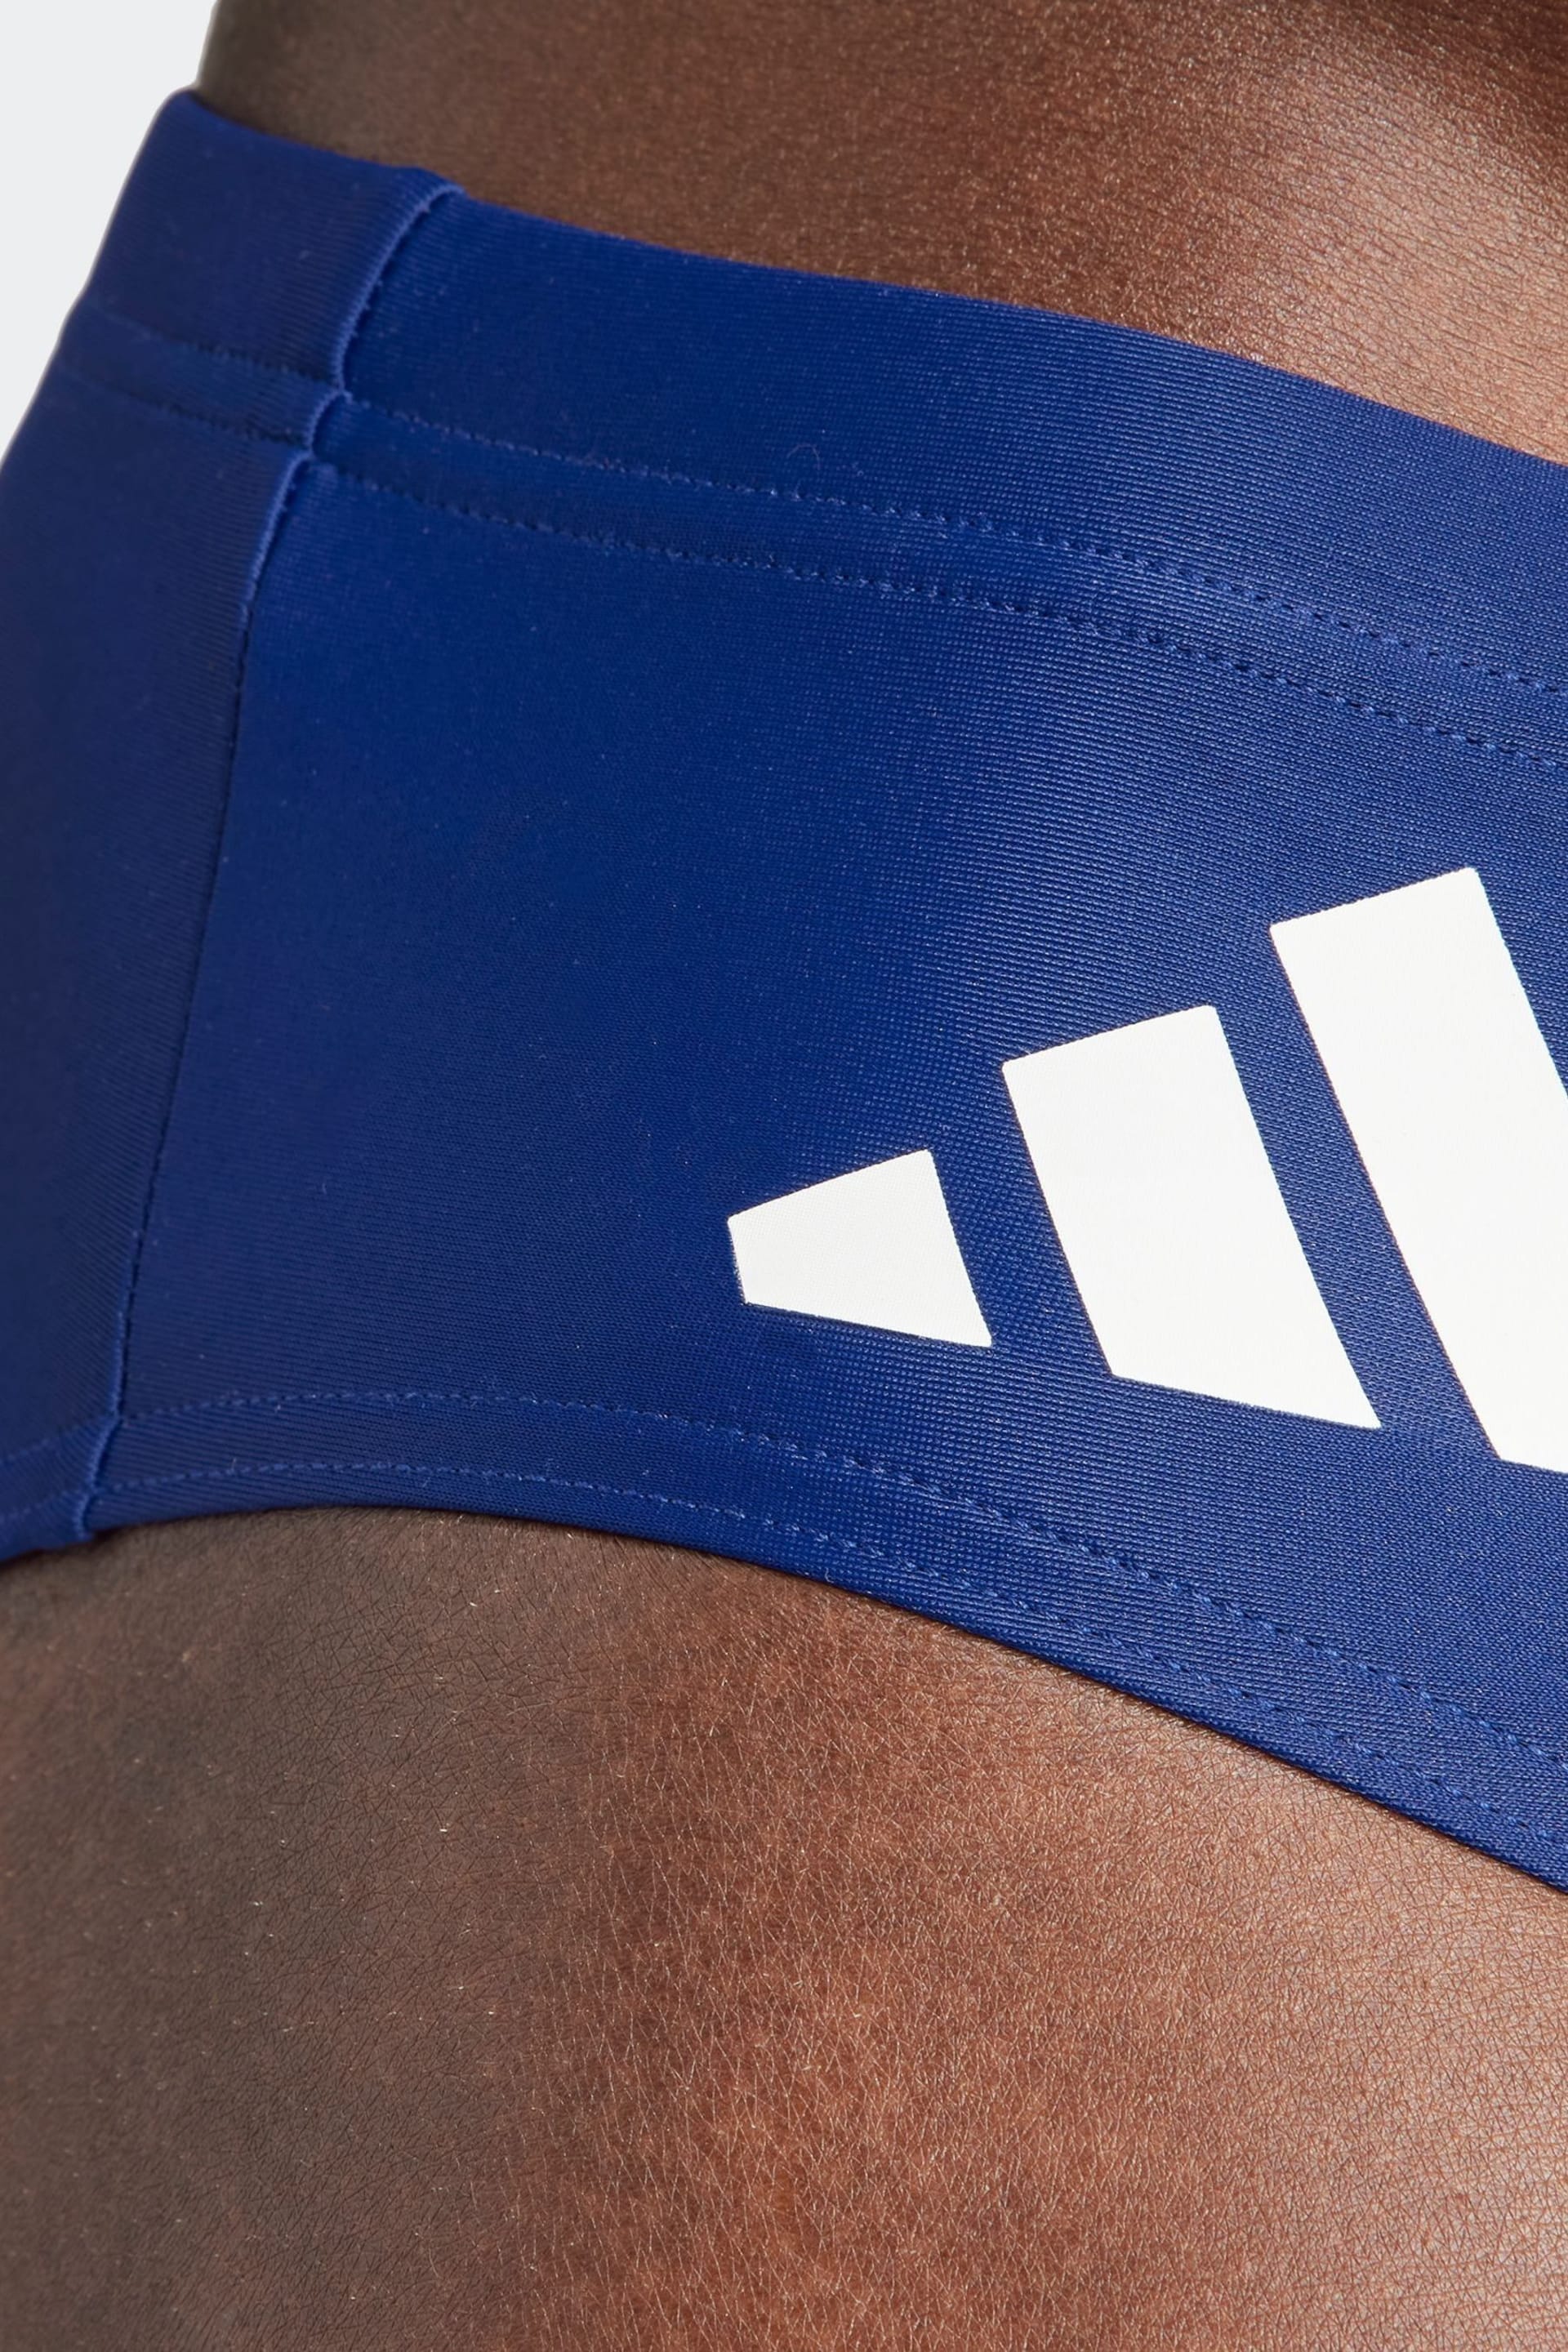 adidas Blue Solid Swim Trunks - Image 5 of 6